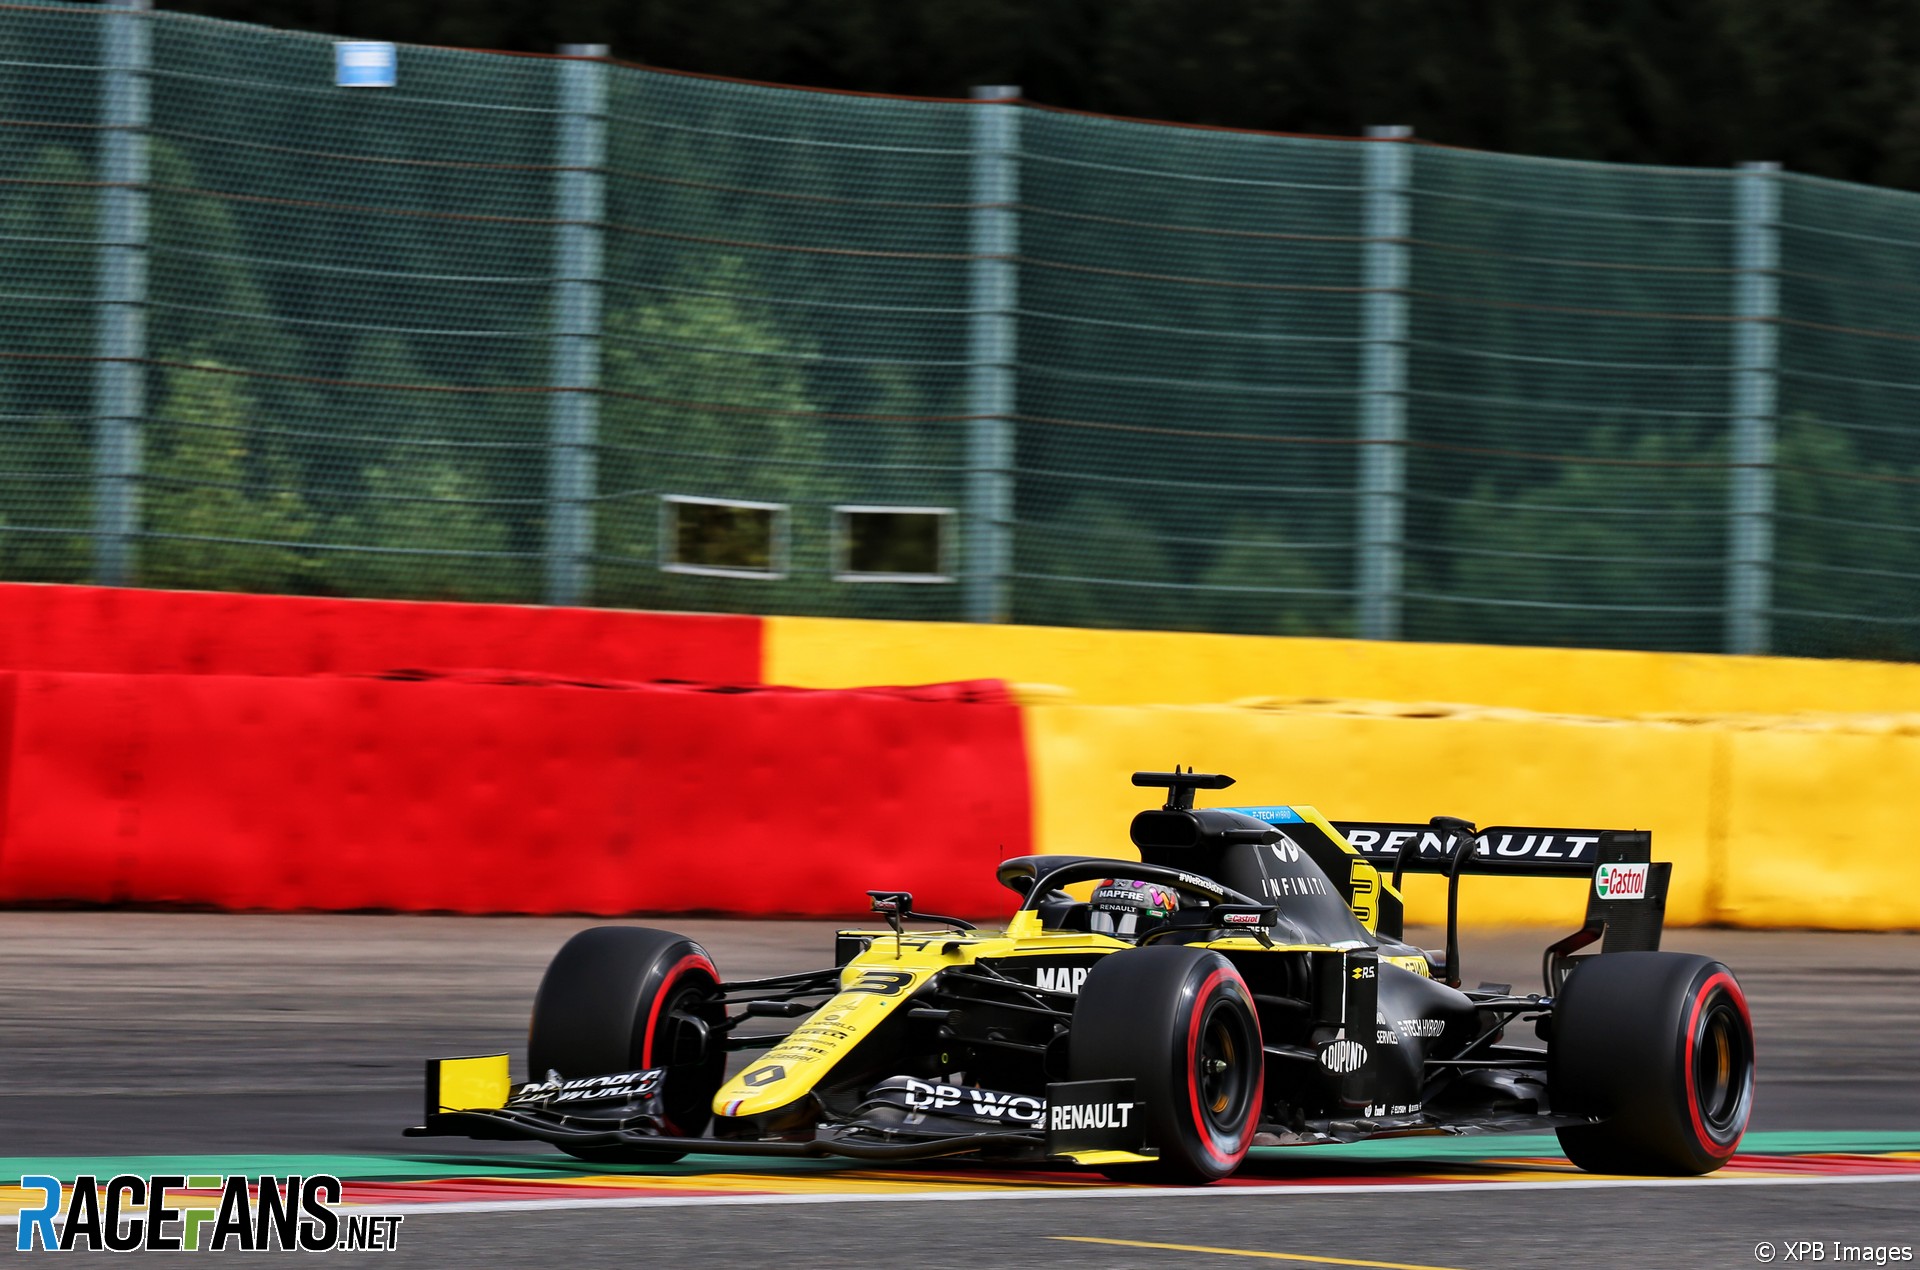 Daniel Ricciardo, Renault, Spa-Francorchamps, 2020